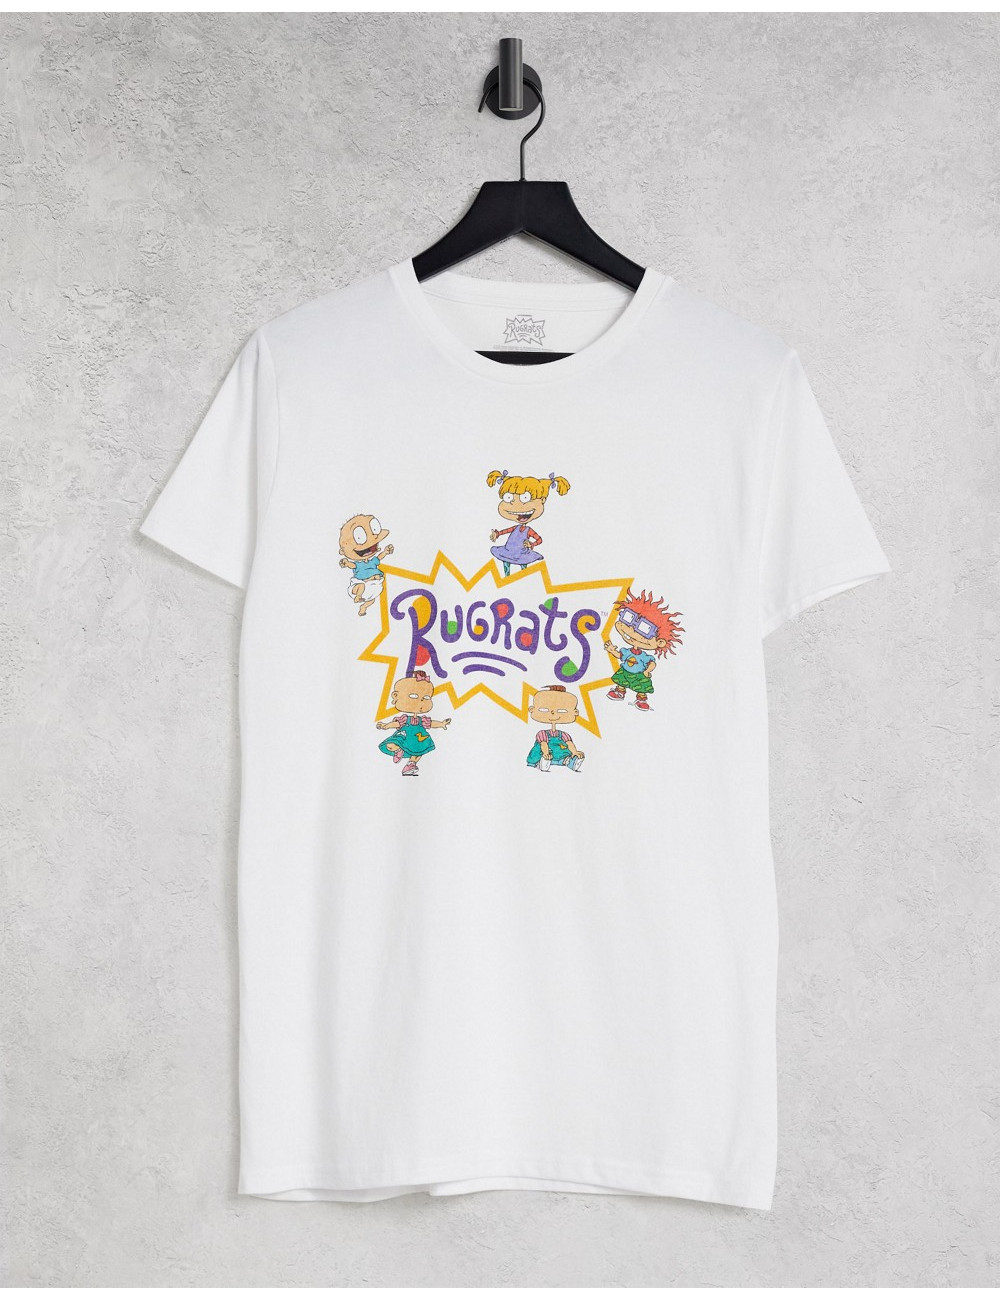 Rugrats Logo t-shirt in white